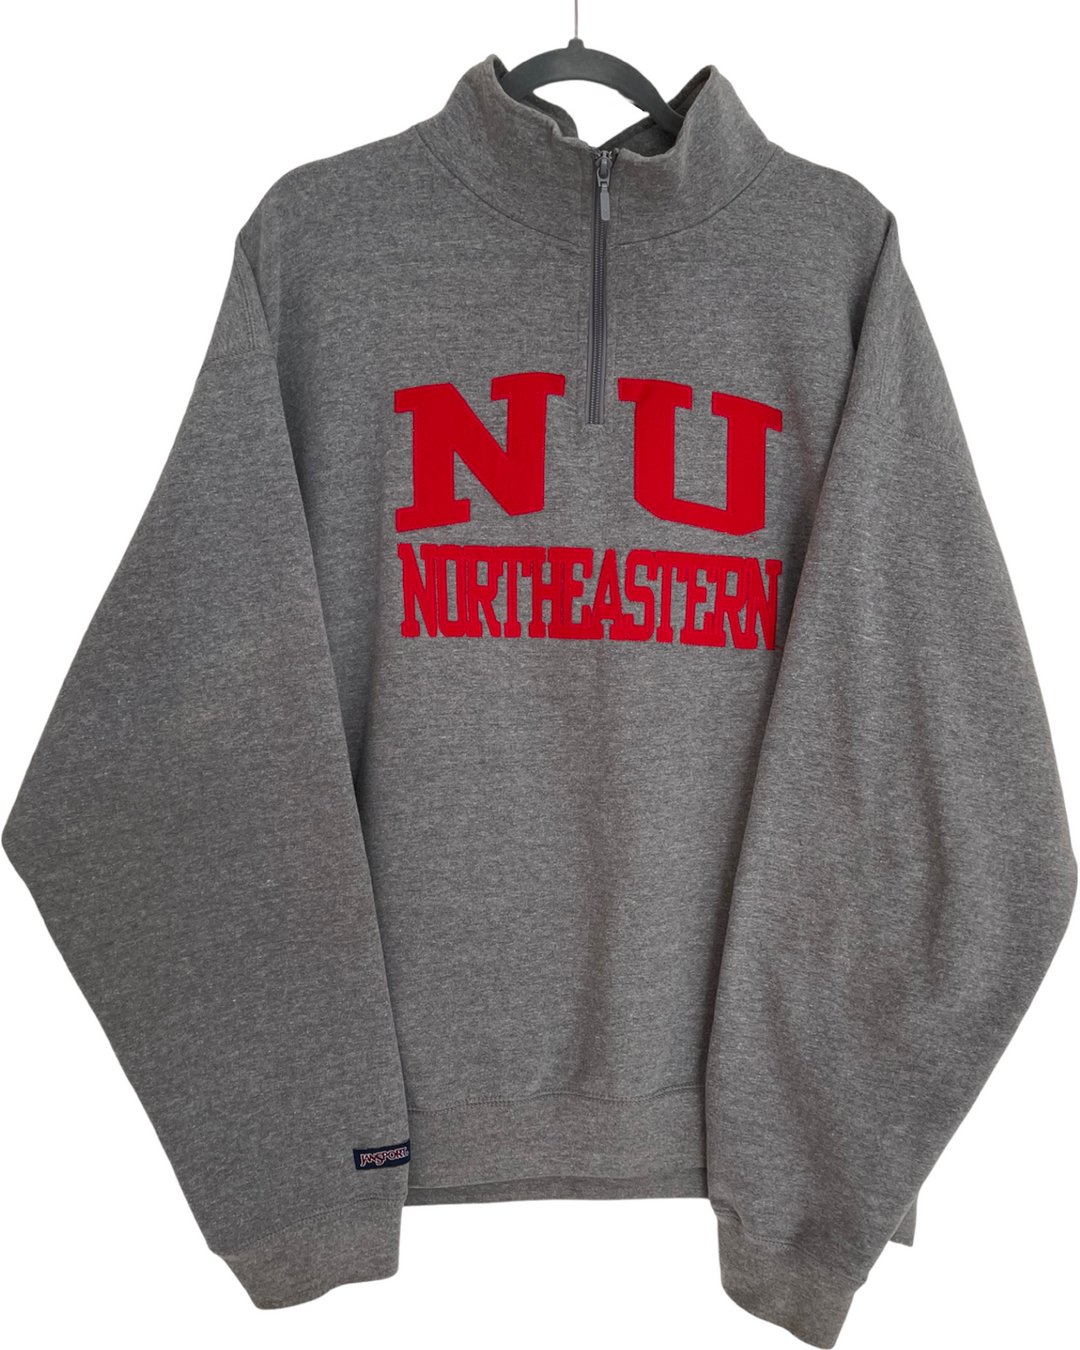 Northeastern Vintage Sweatshirt